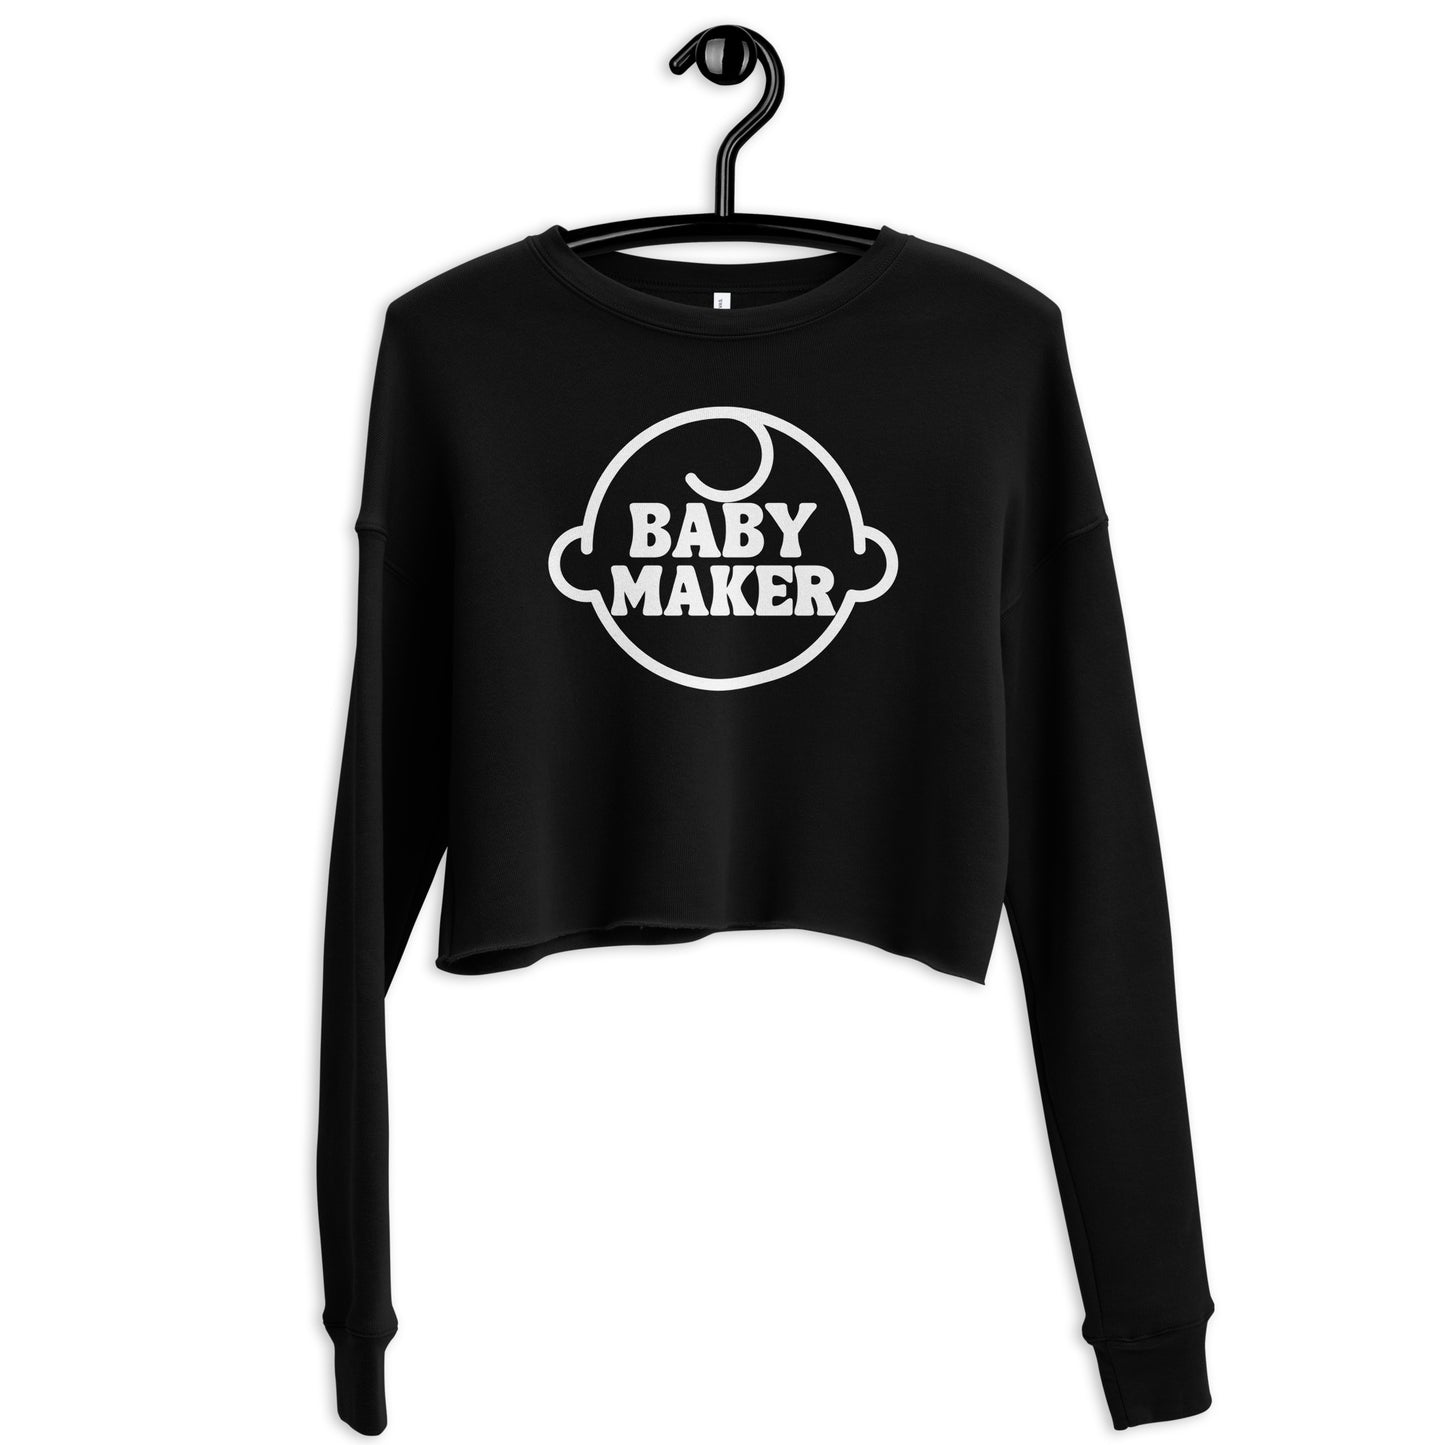 Baby Maker Cropped Sweatshirt in Black